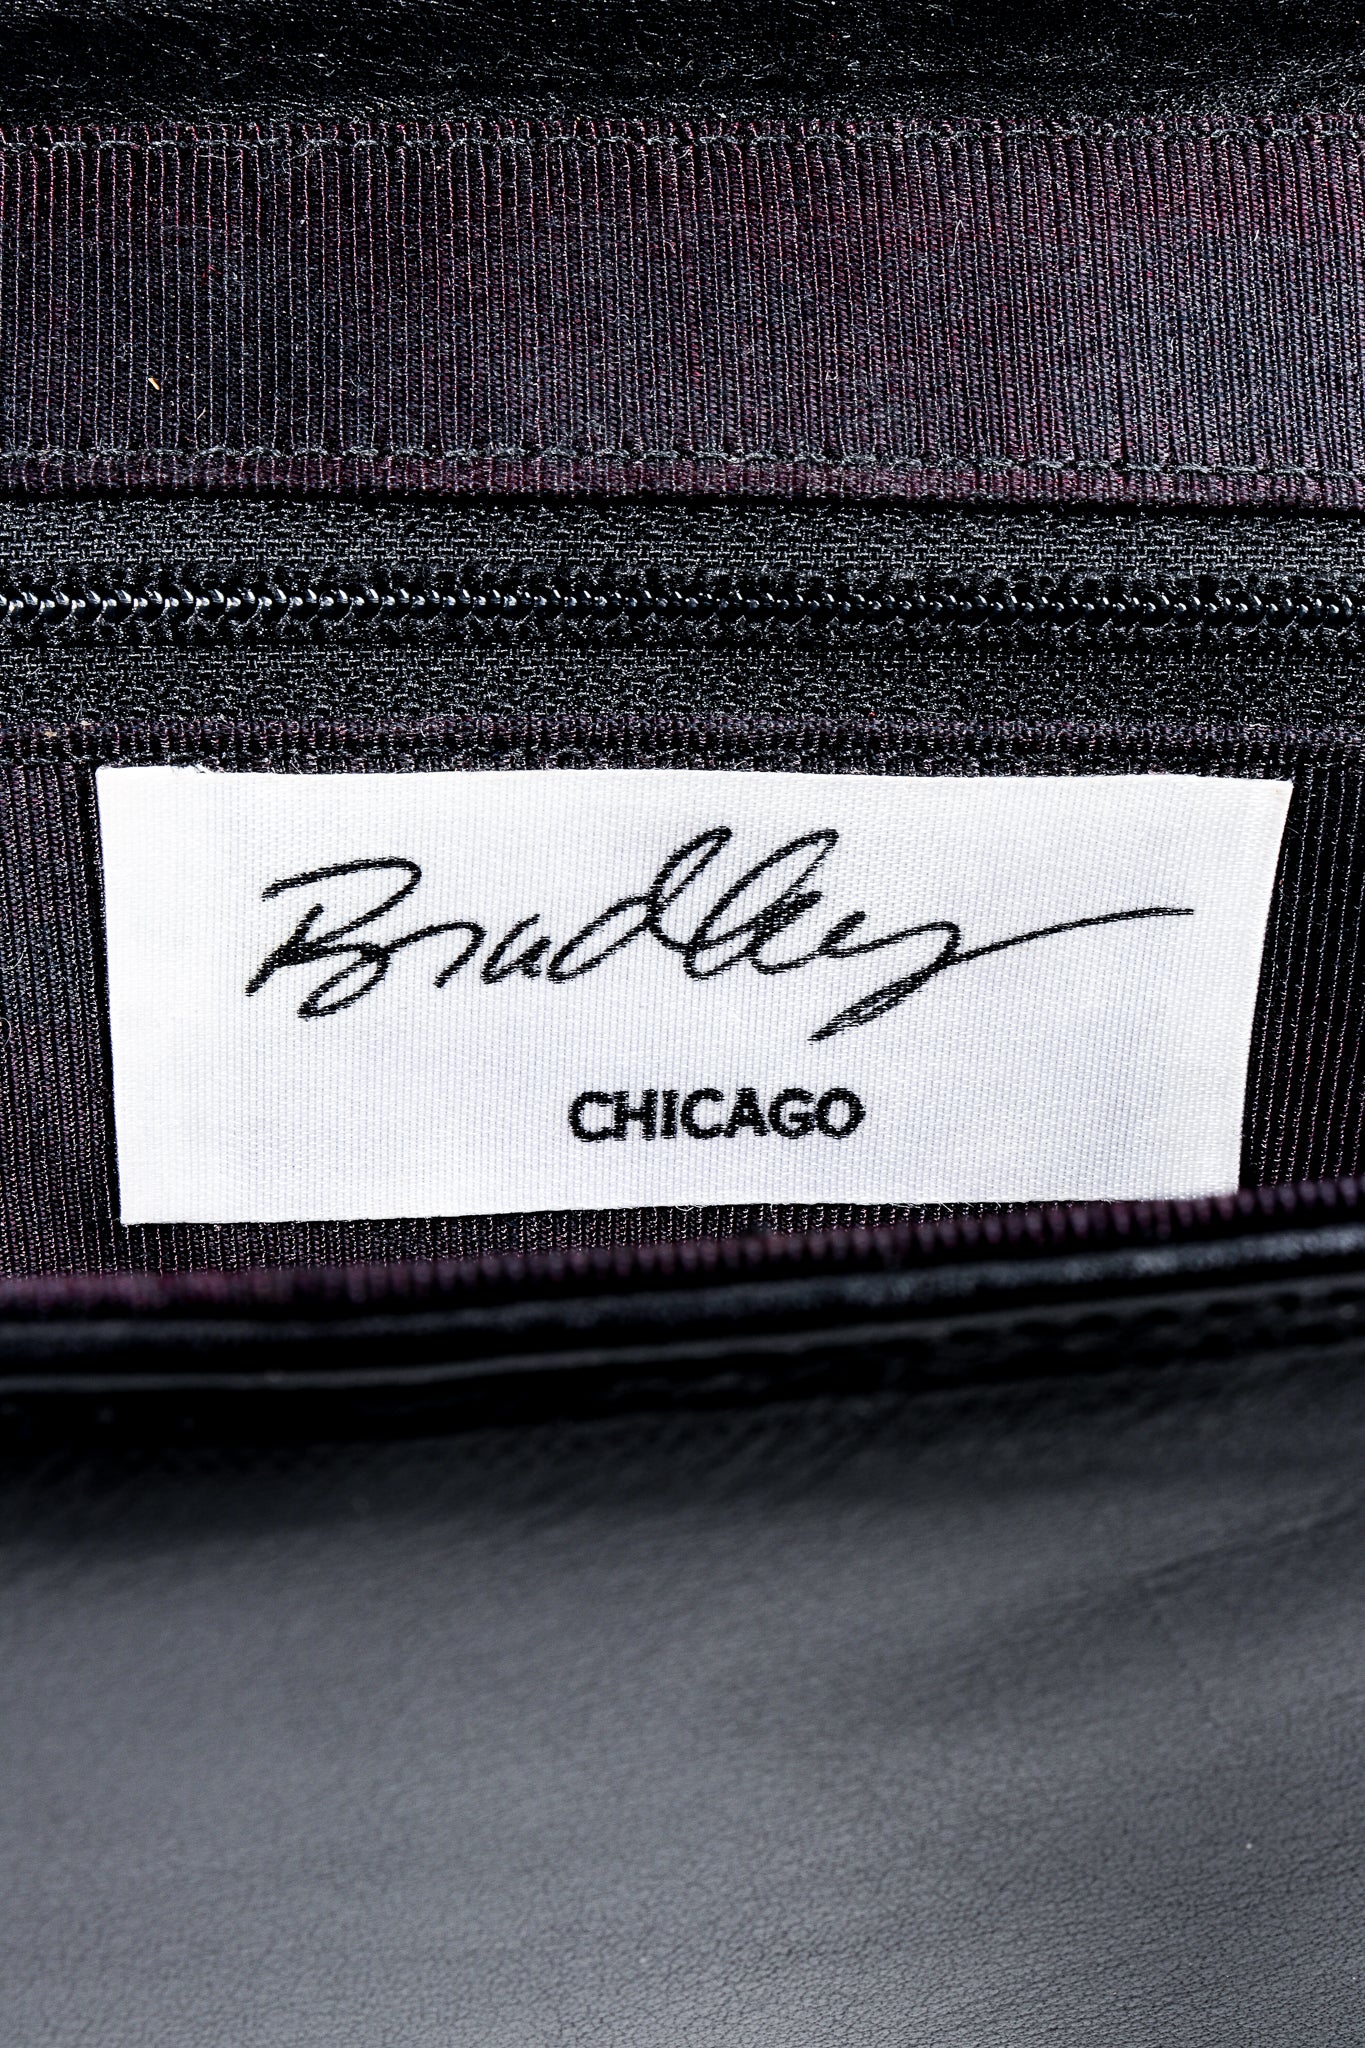 Vintage Bradley Emerald Eyes Beaded Bag Label on black